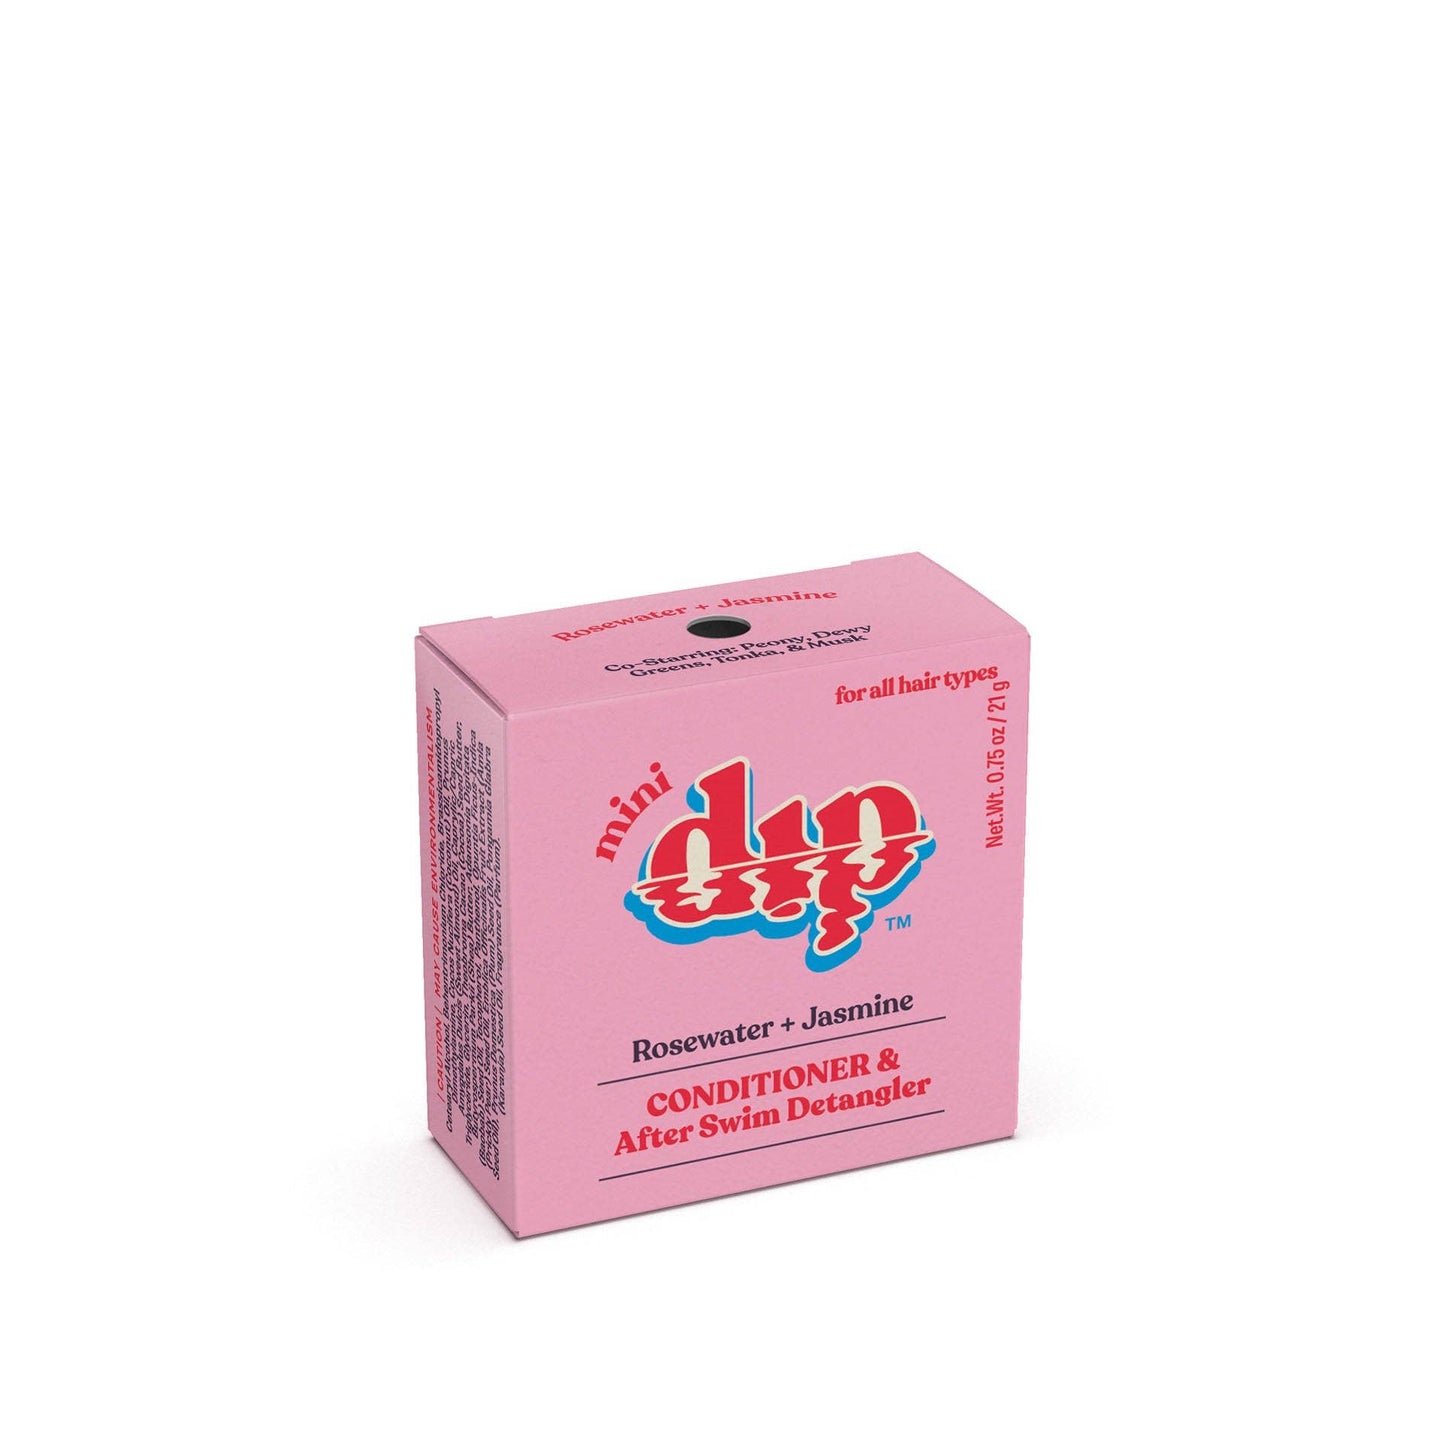 Dip - Mini Dip Conditioner & After Swim Detangler - Rosewater & Ja: 0.75 oz